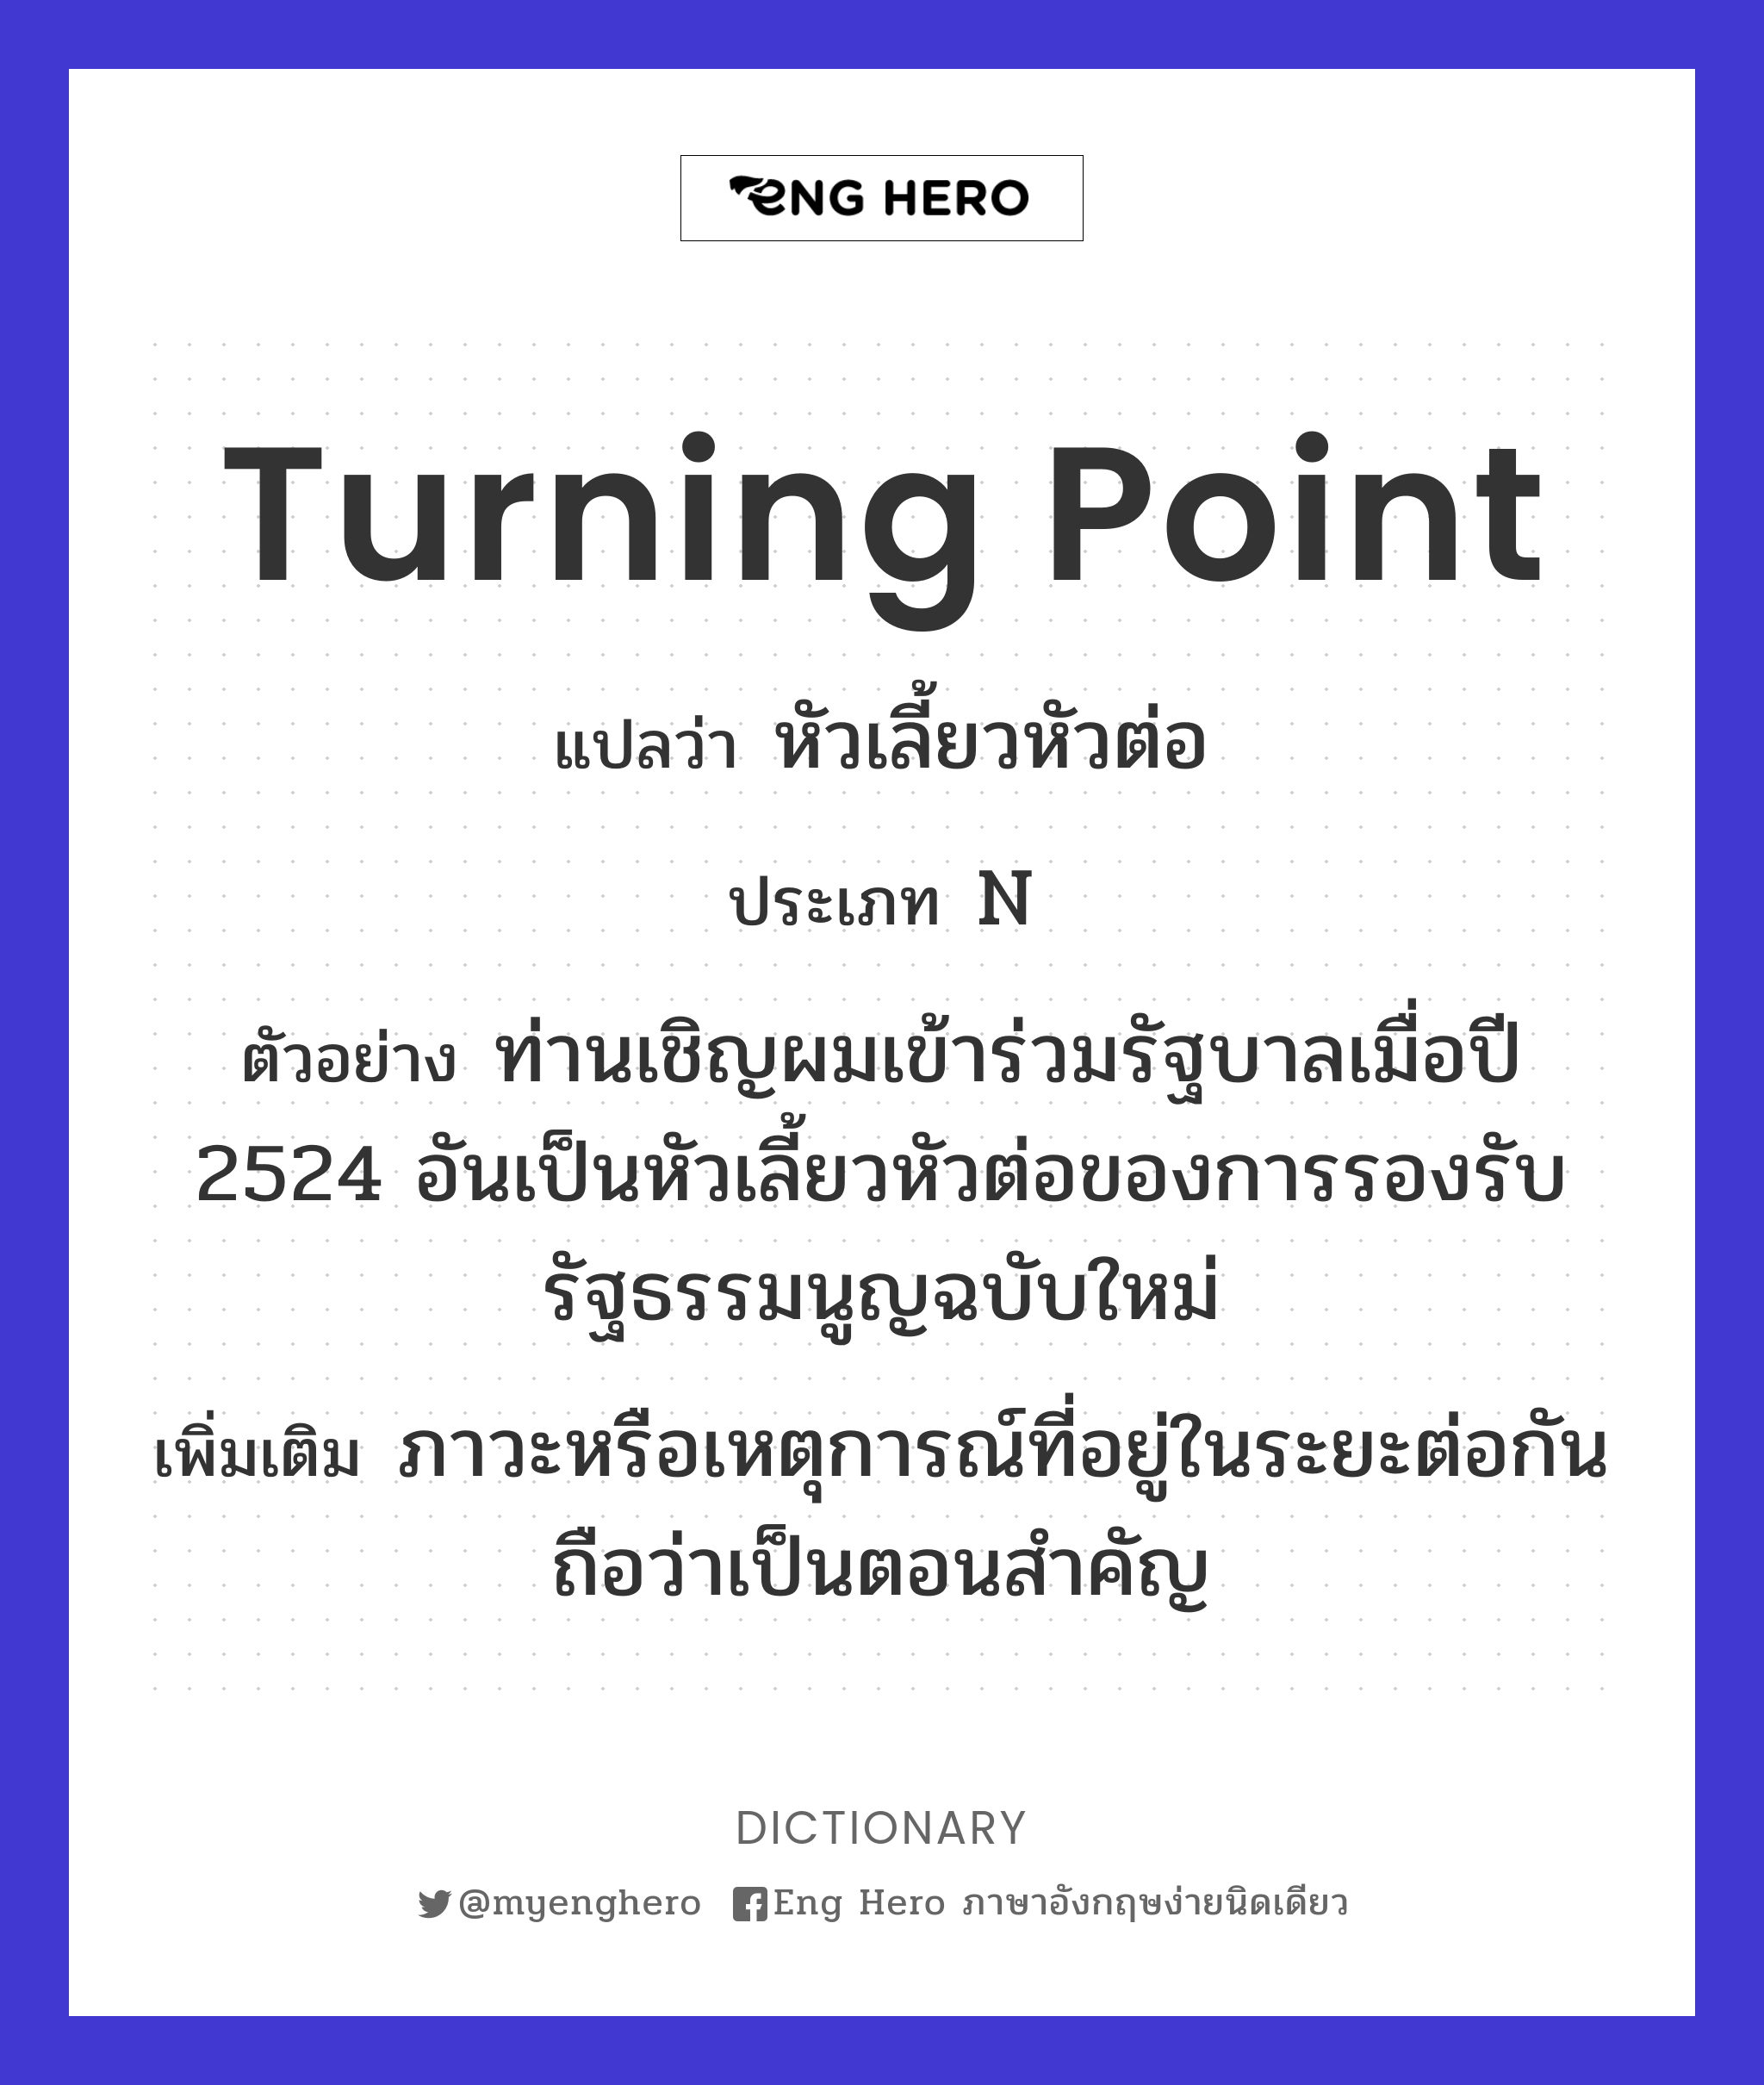 turning point